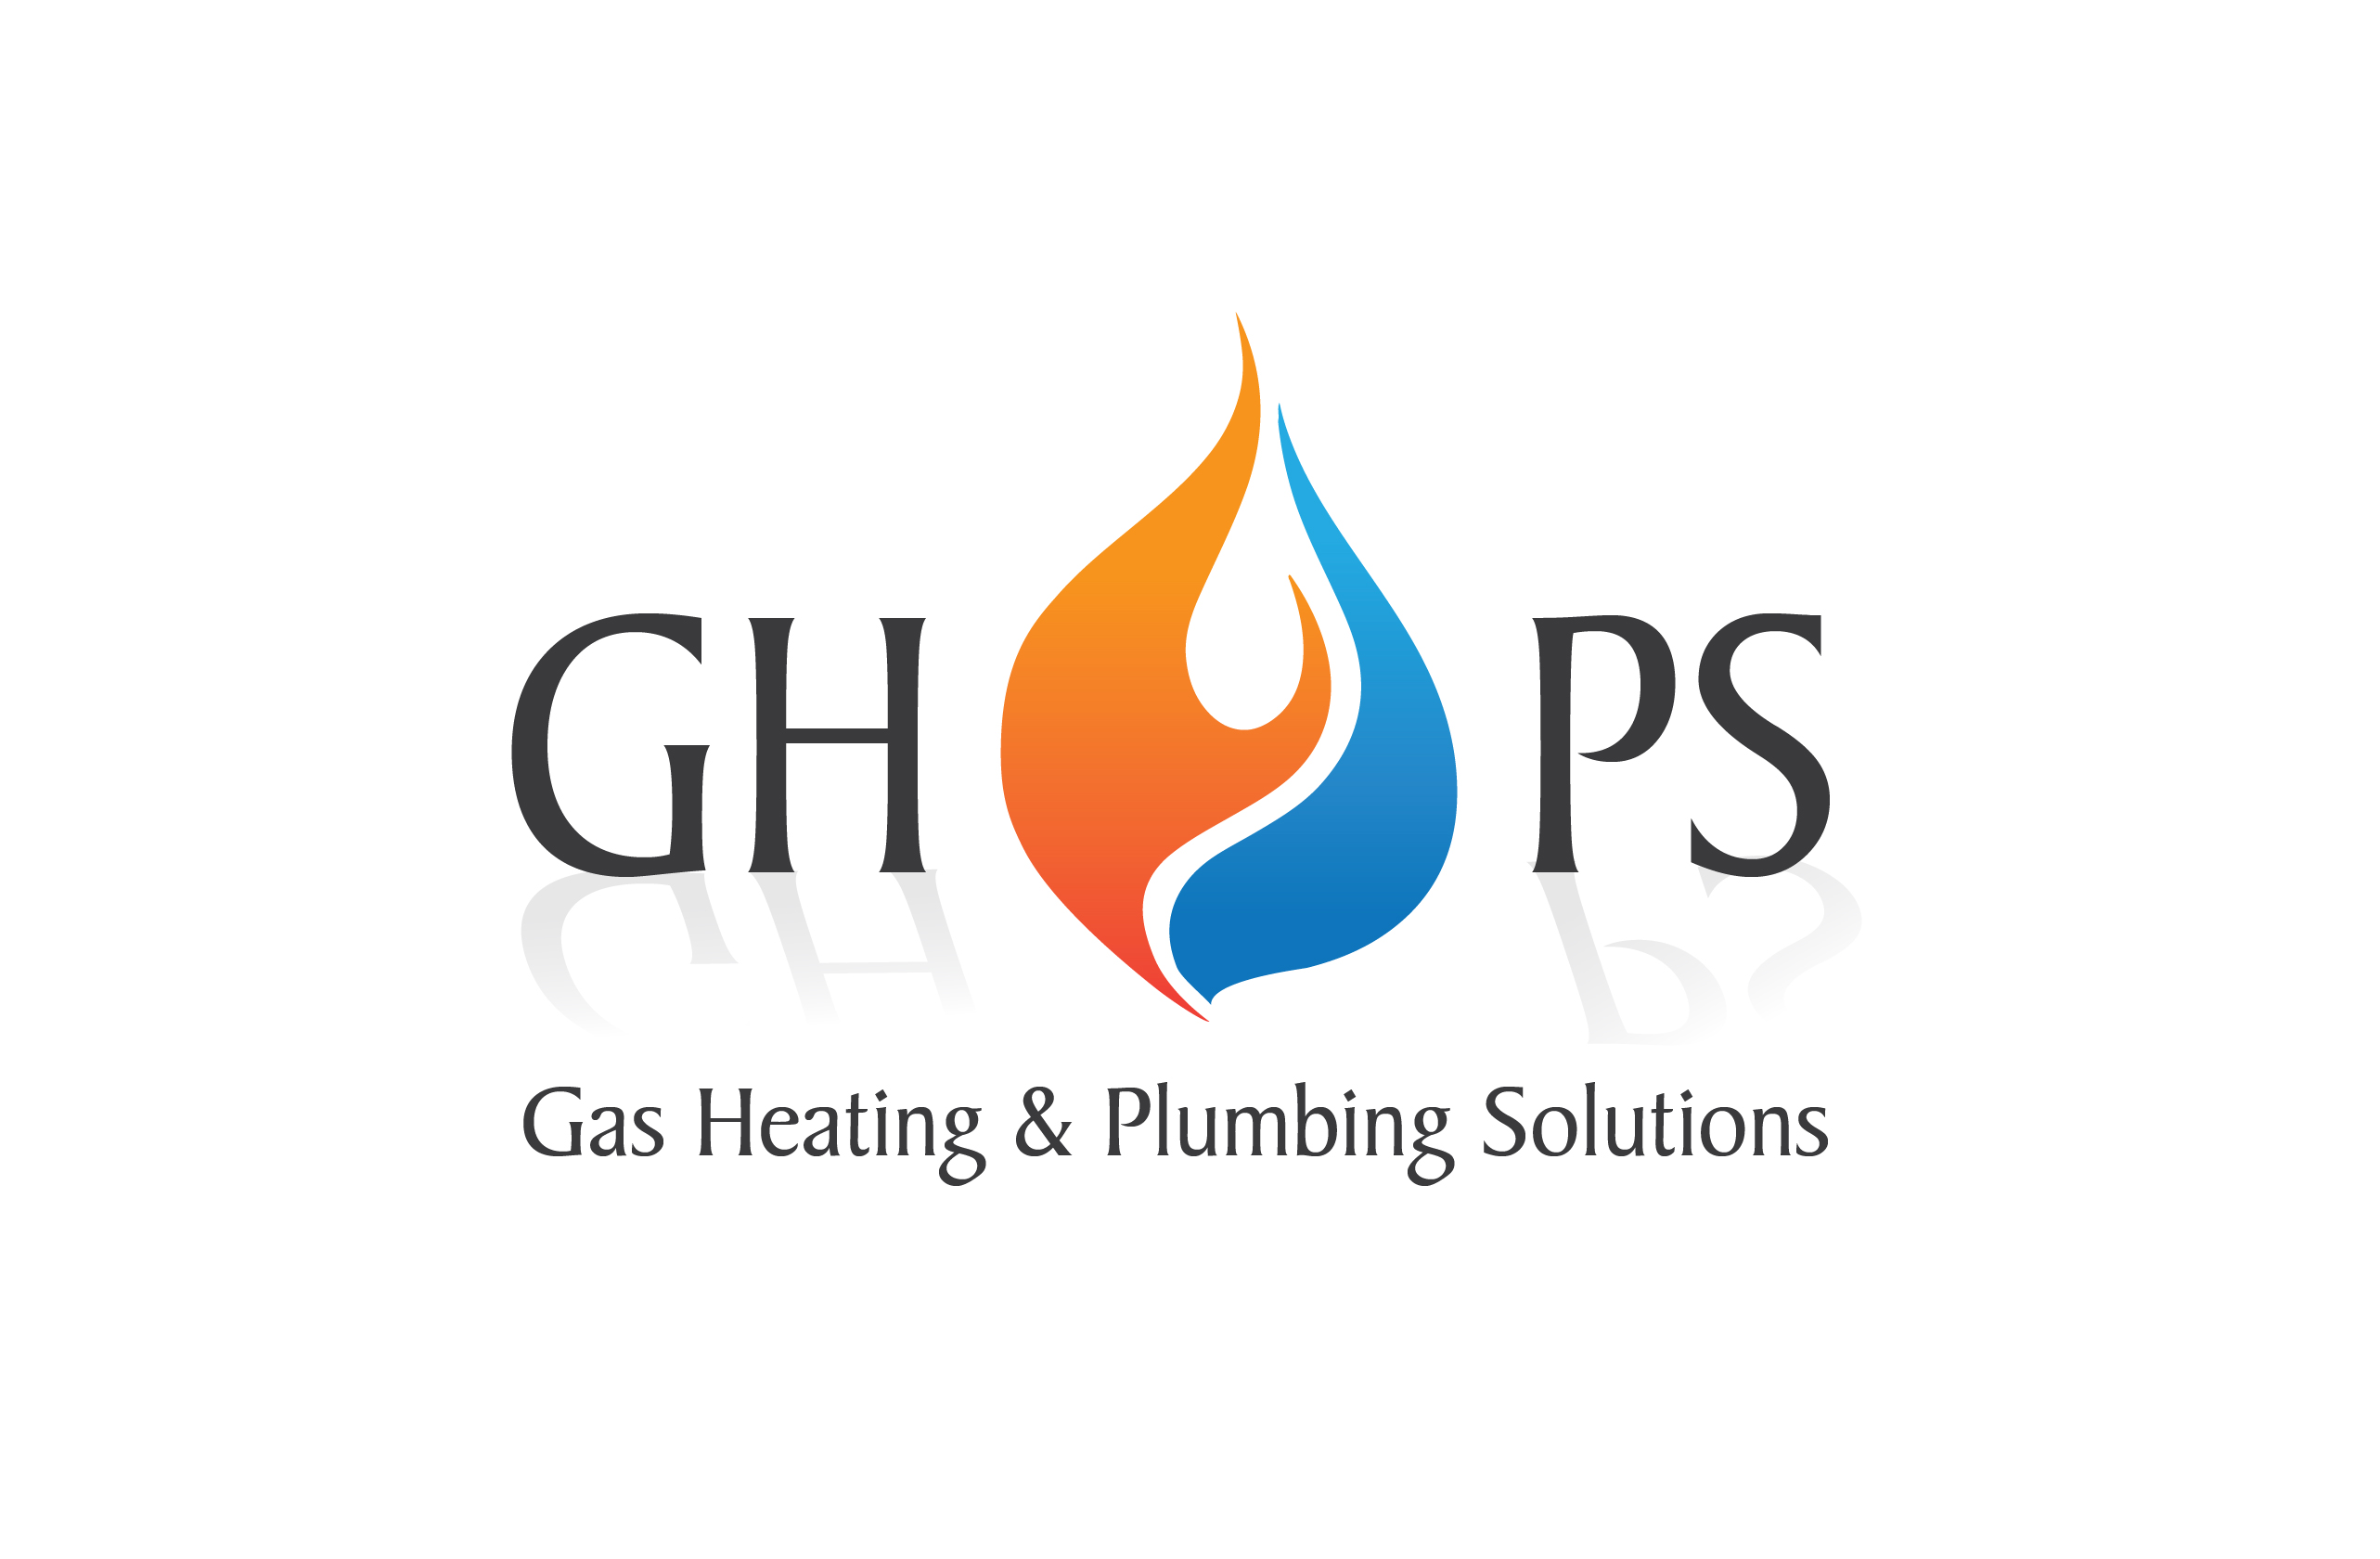 HOS

Gas Heating &amp; Plumbing Solutions